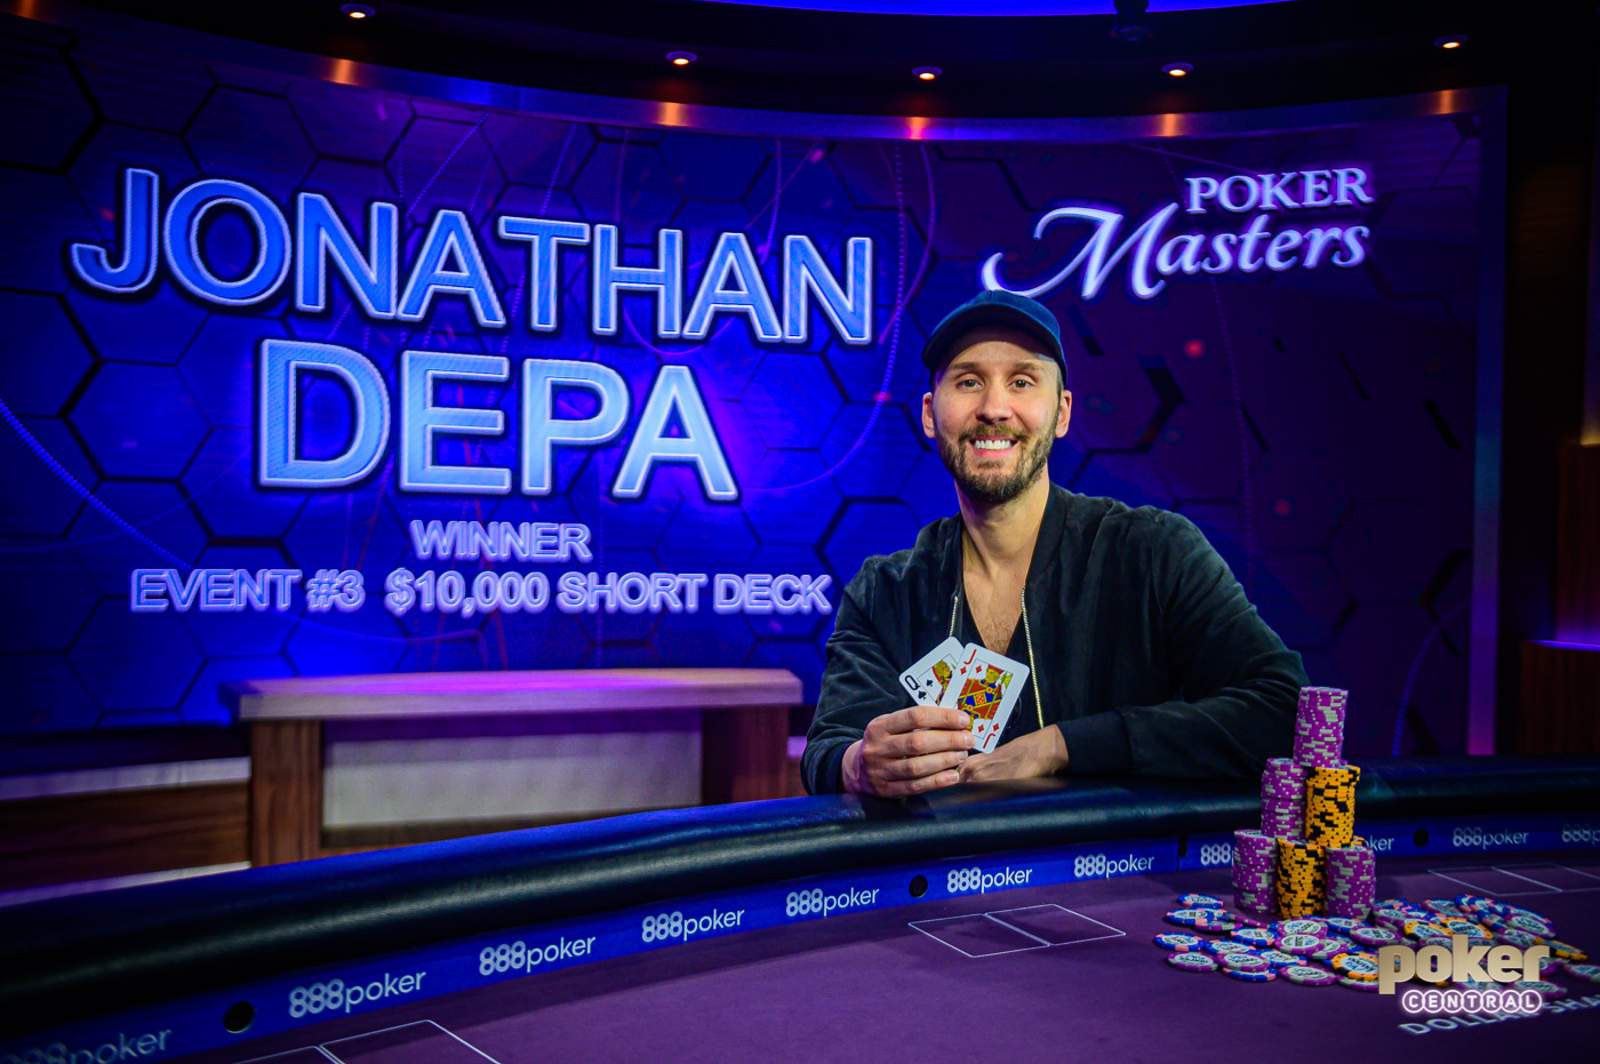 Short Deck Specialist Jonathan Depa Wins Poker Masters Event #3